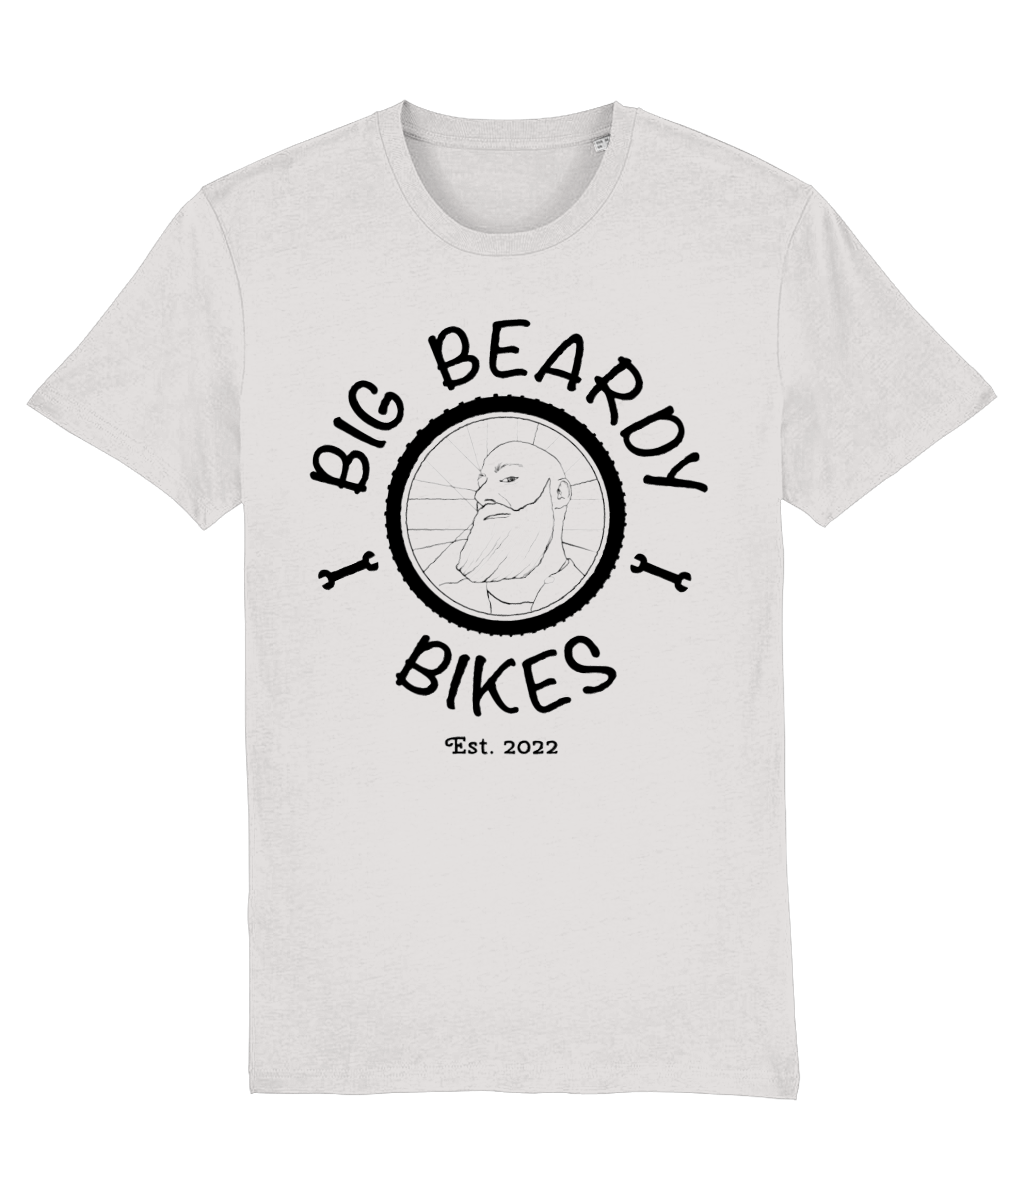 Big beardy bikes tee shirt cream heather black logo